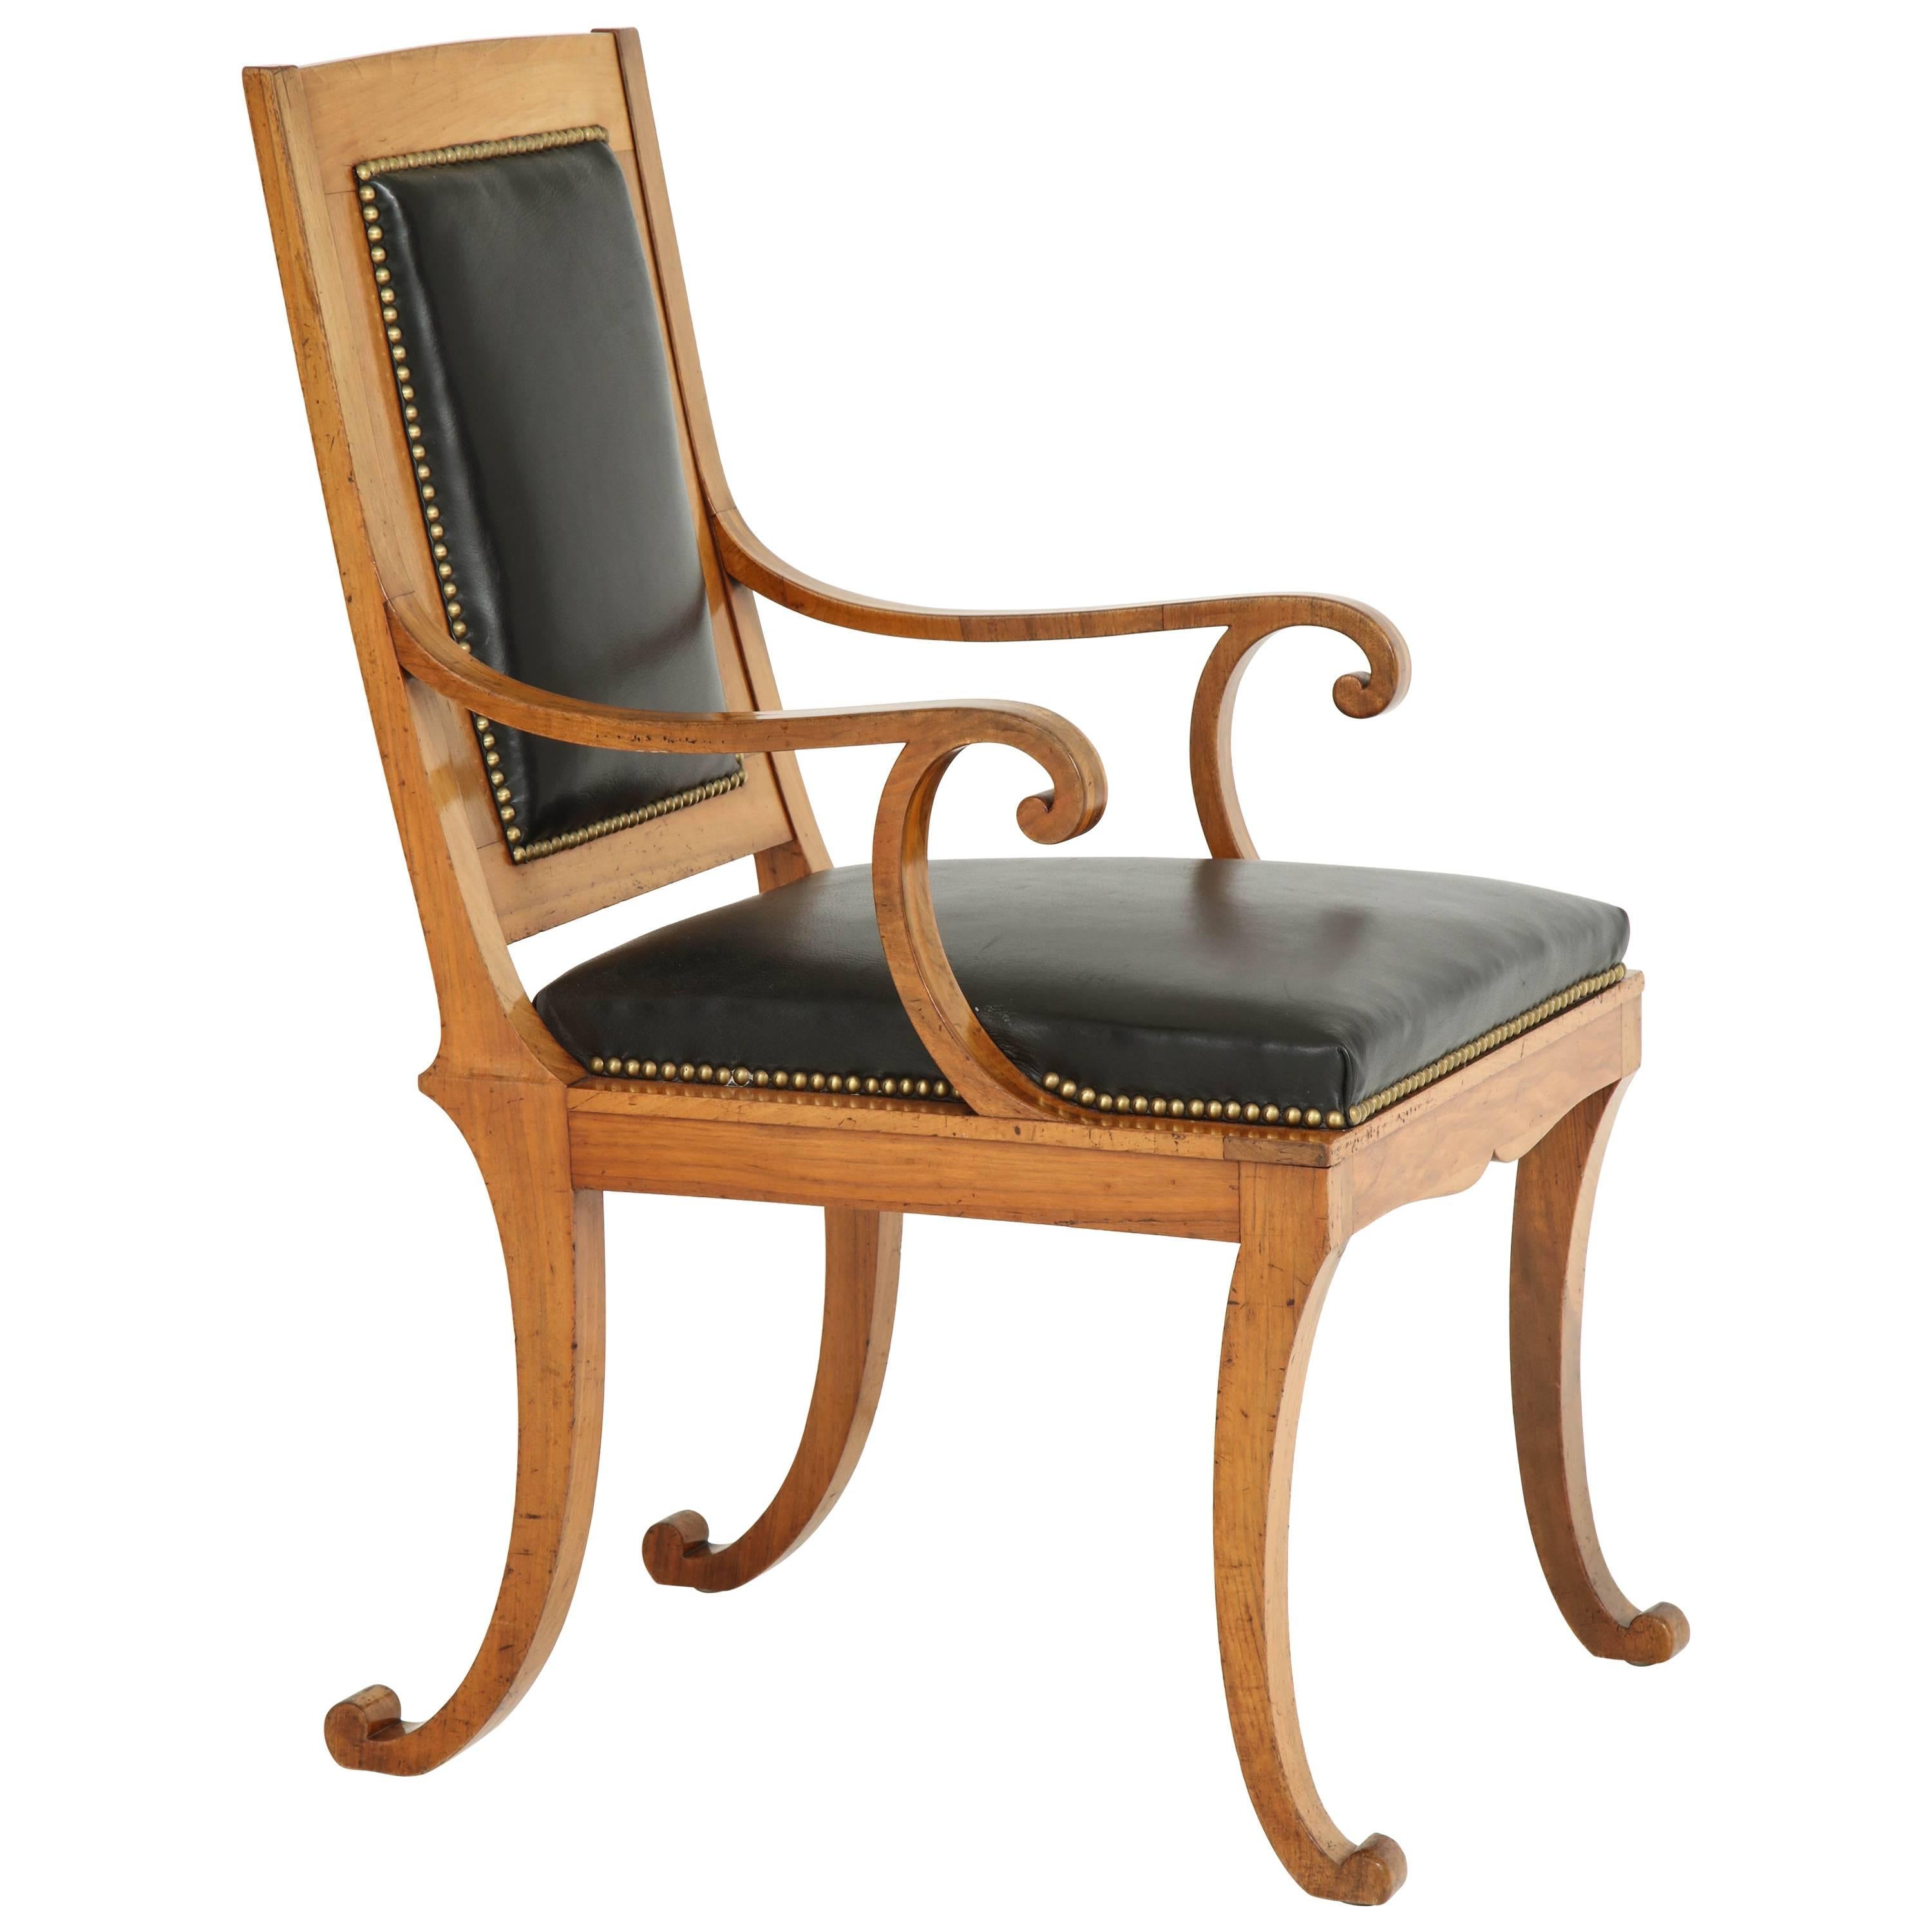 Rare German Fruitwood Klismos Chair, circa 1840s